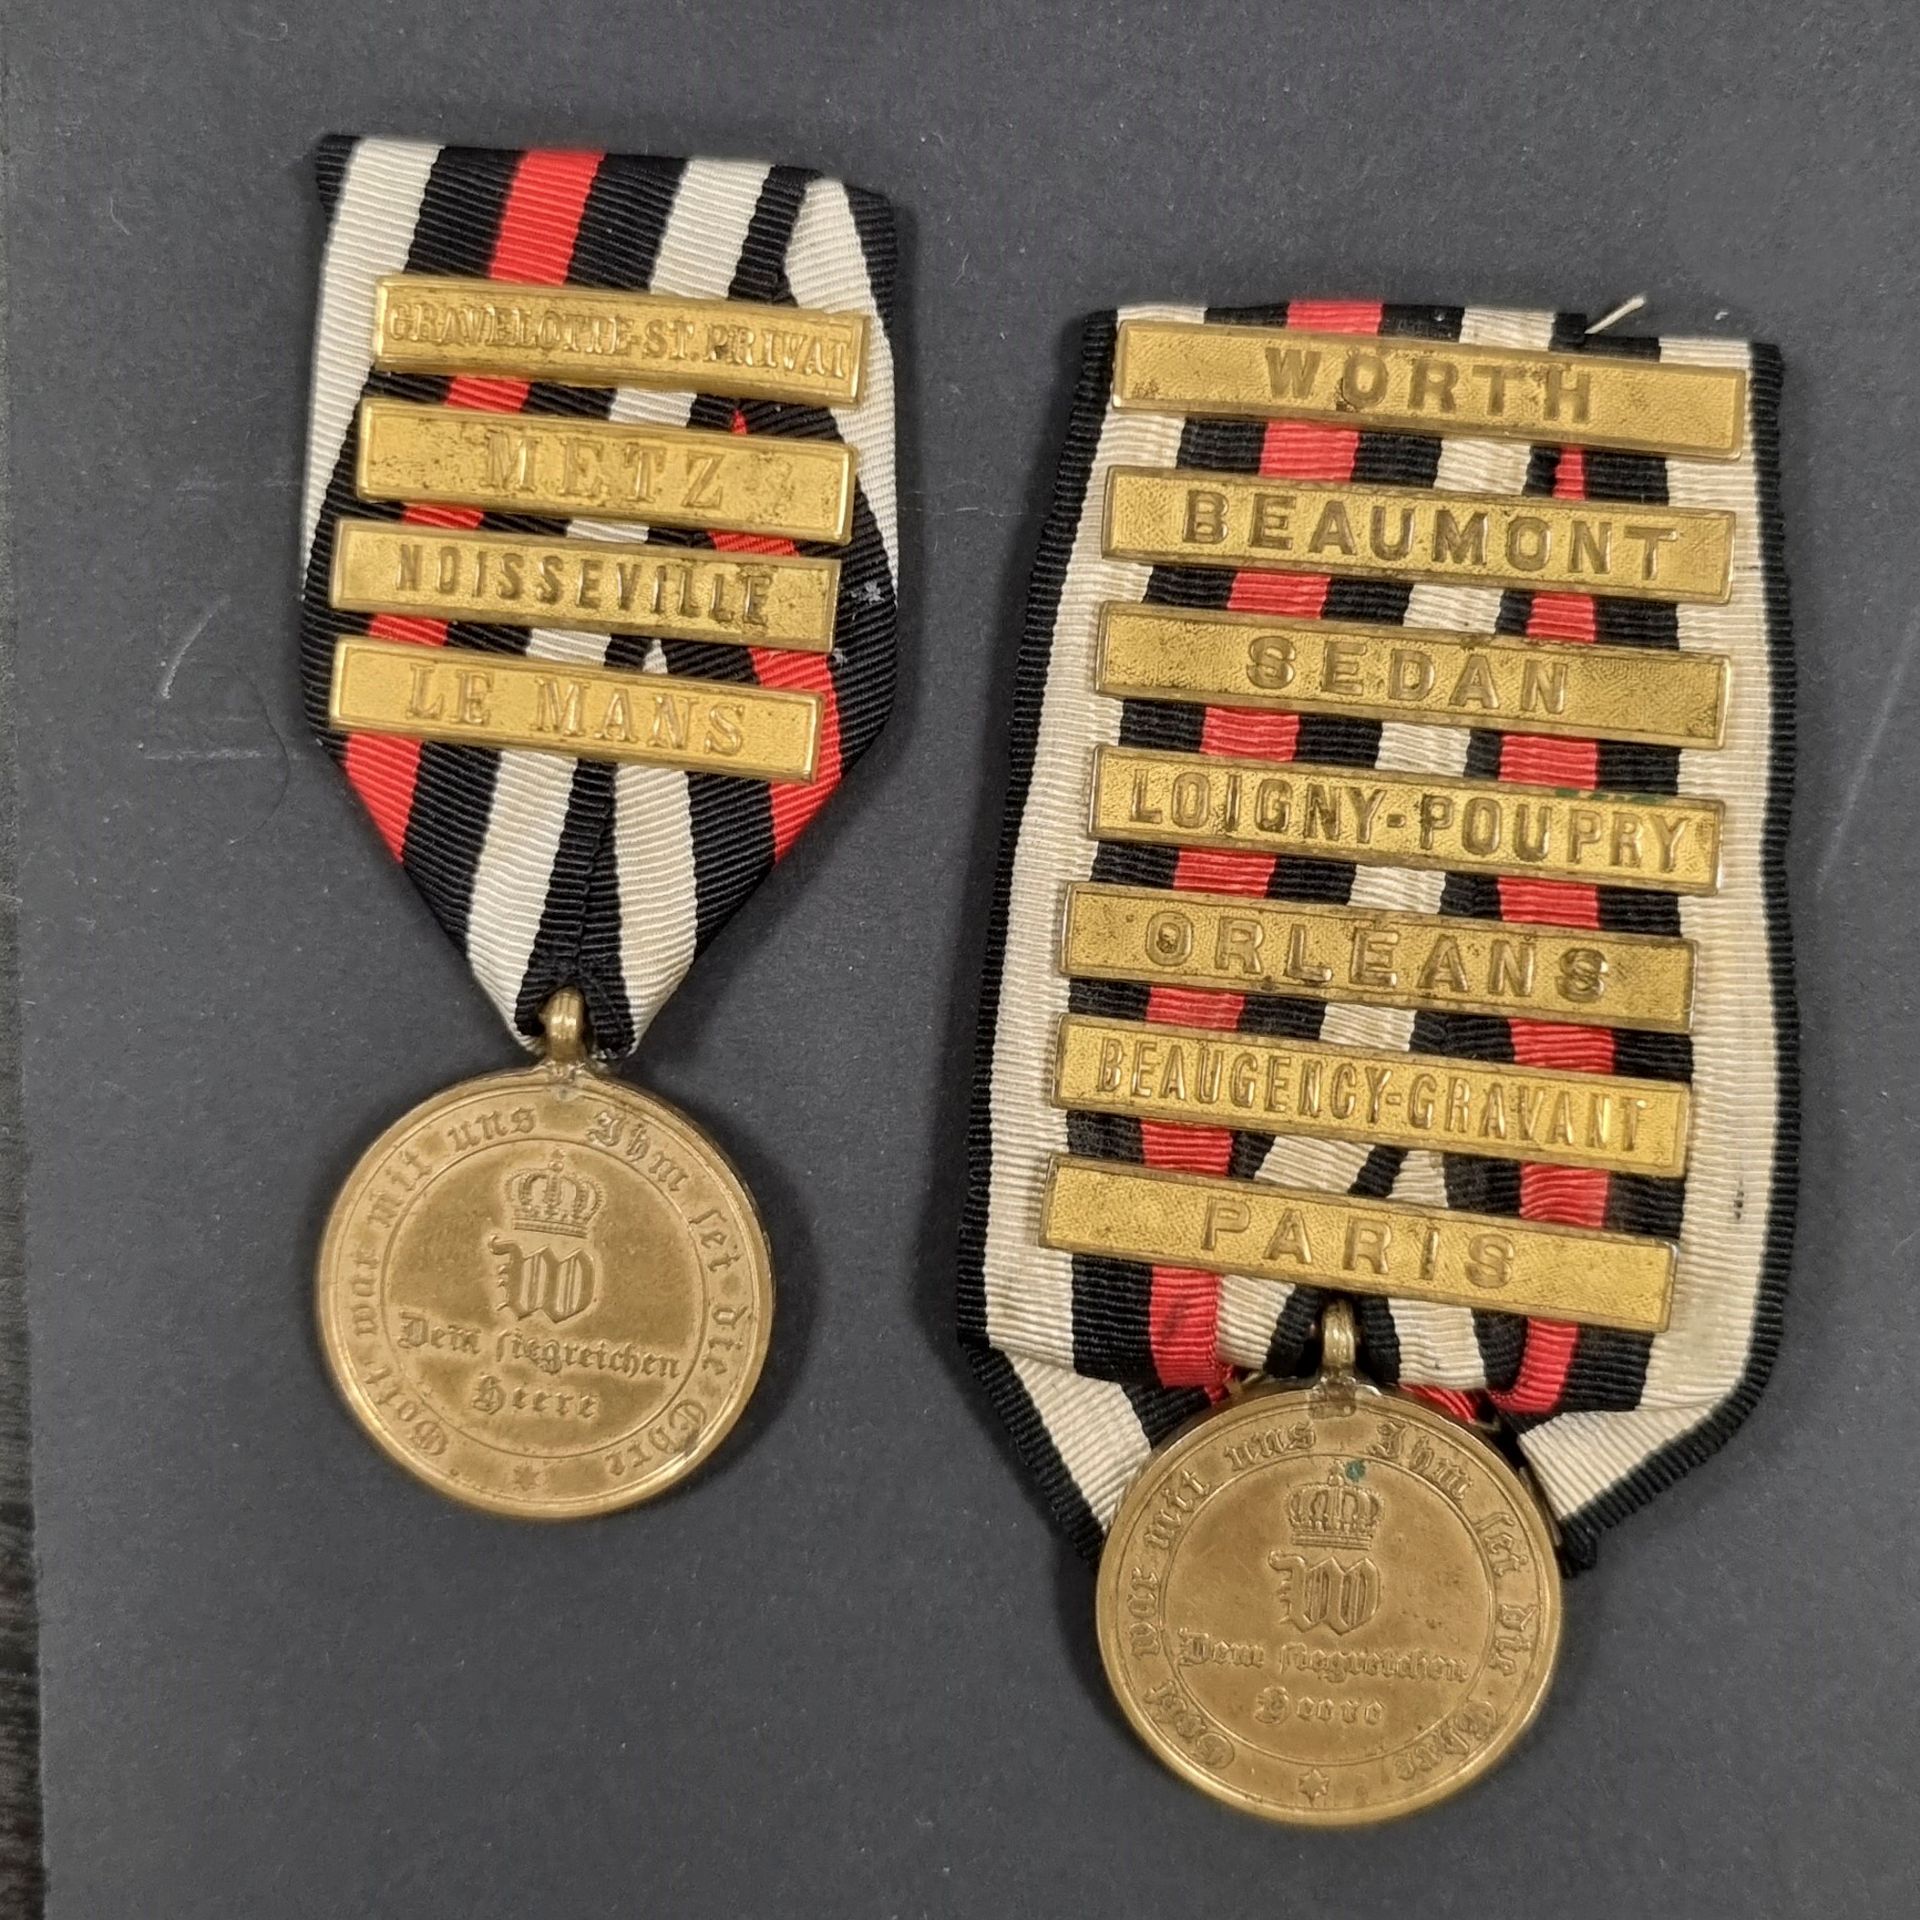 Null 普鲁士 
1870-1871年战争的两枚纪念章，为铜制的战斗员：
- 丝带安装在纸板上，有七个扣子 
"价值"、"博蒙"、"轿子"、 
"Loigny&hellip;